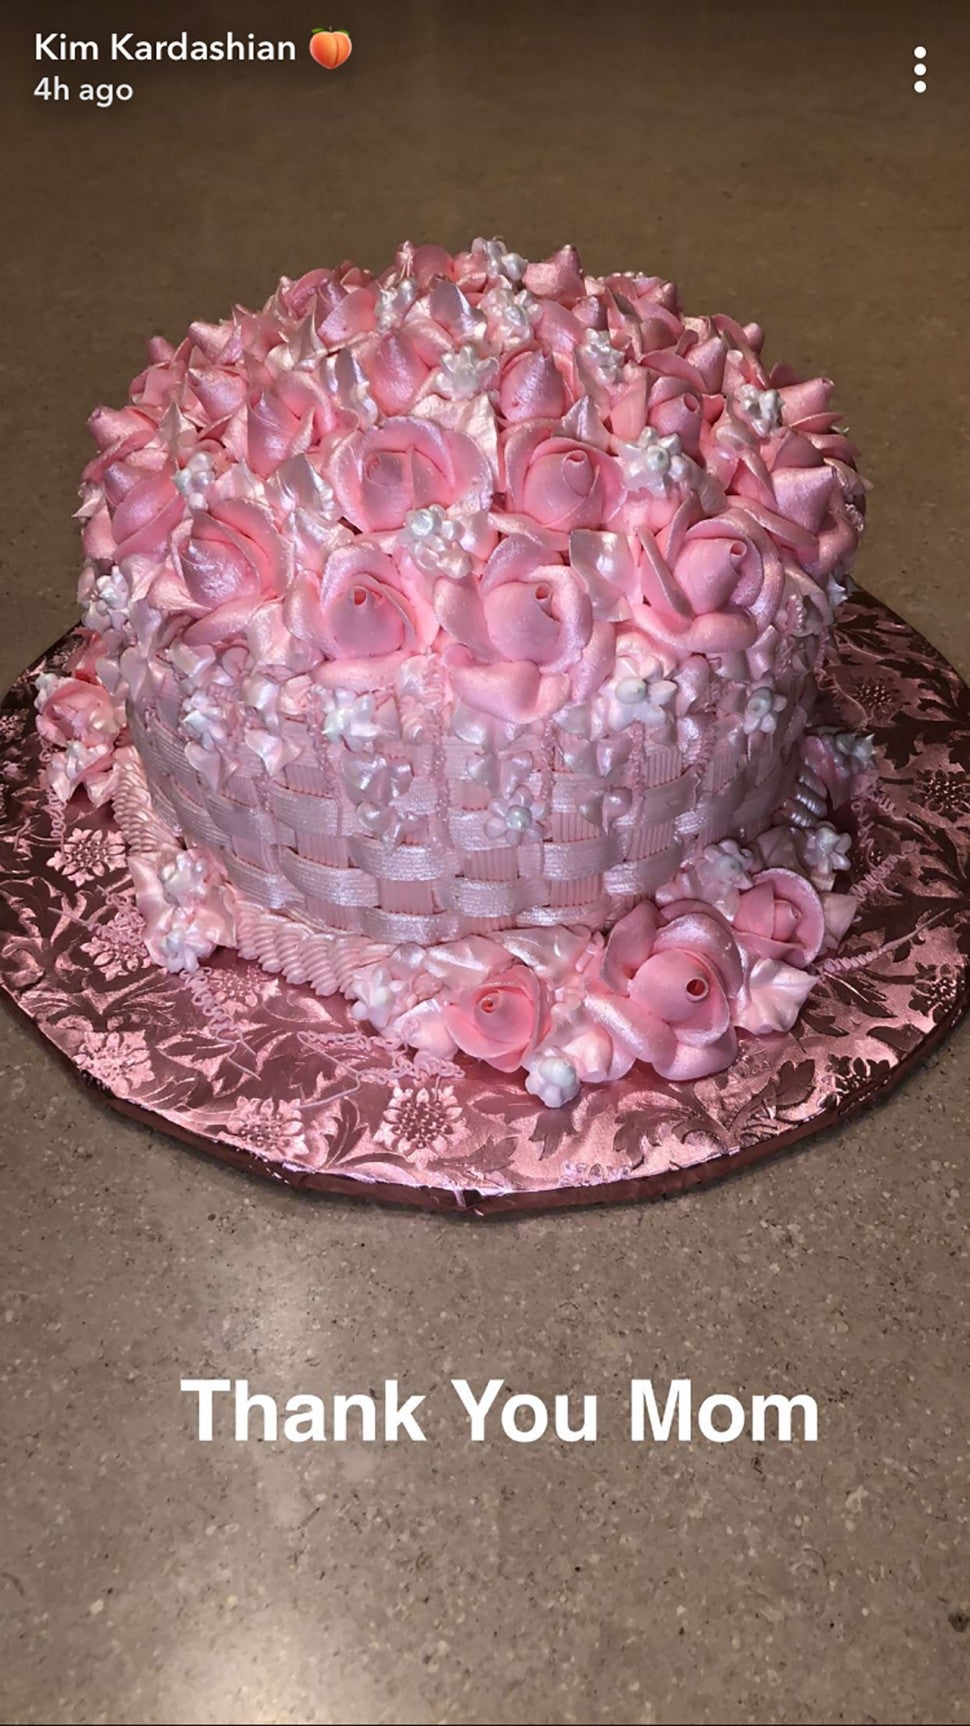 Kim Kardashian cake